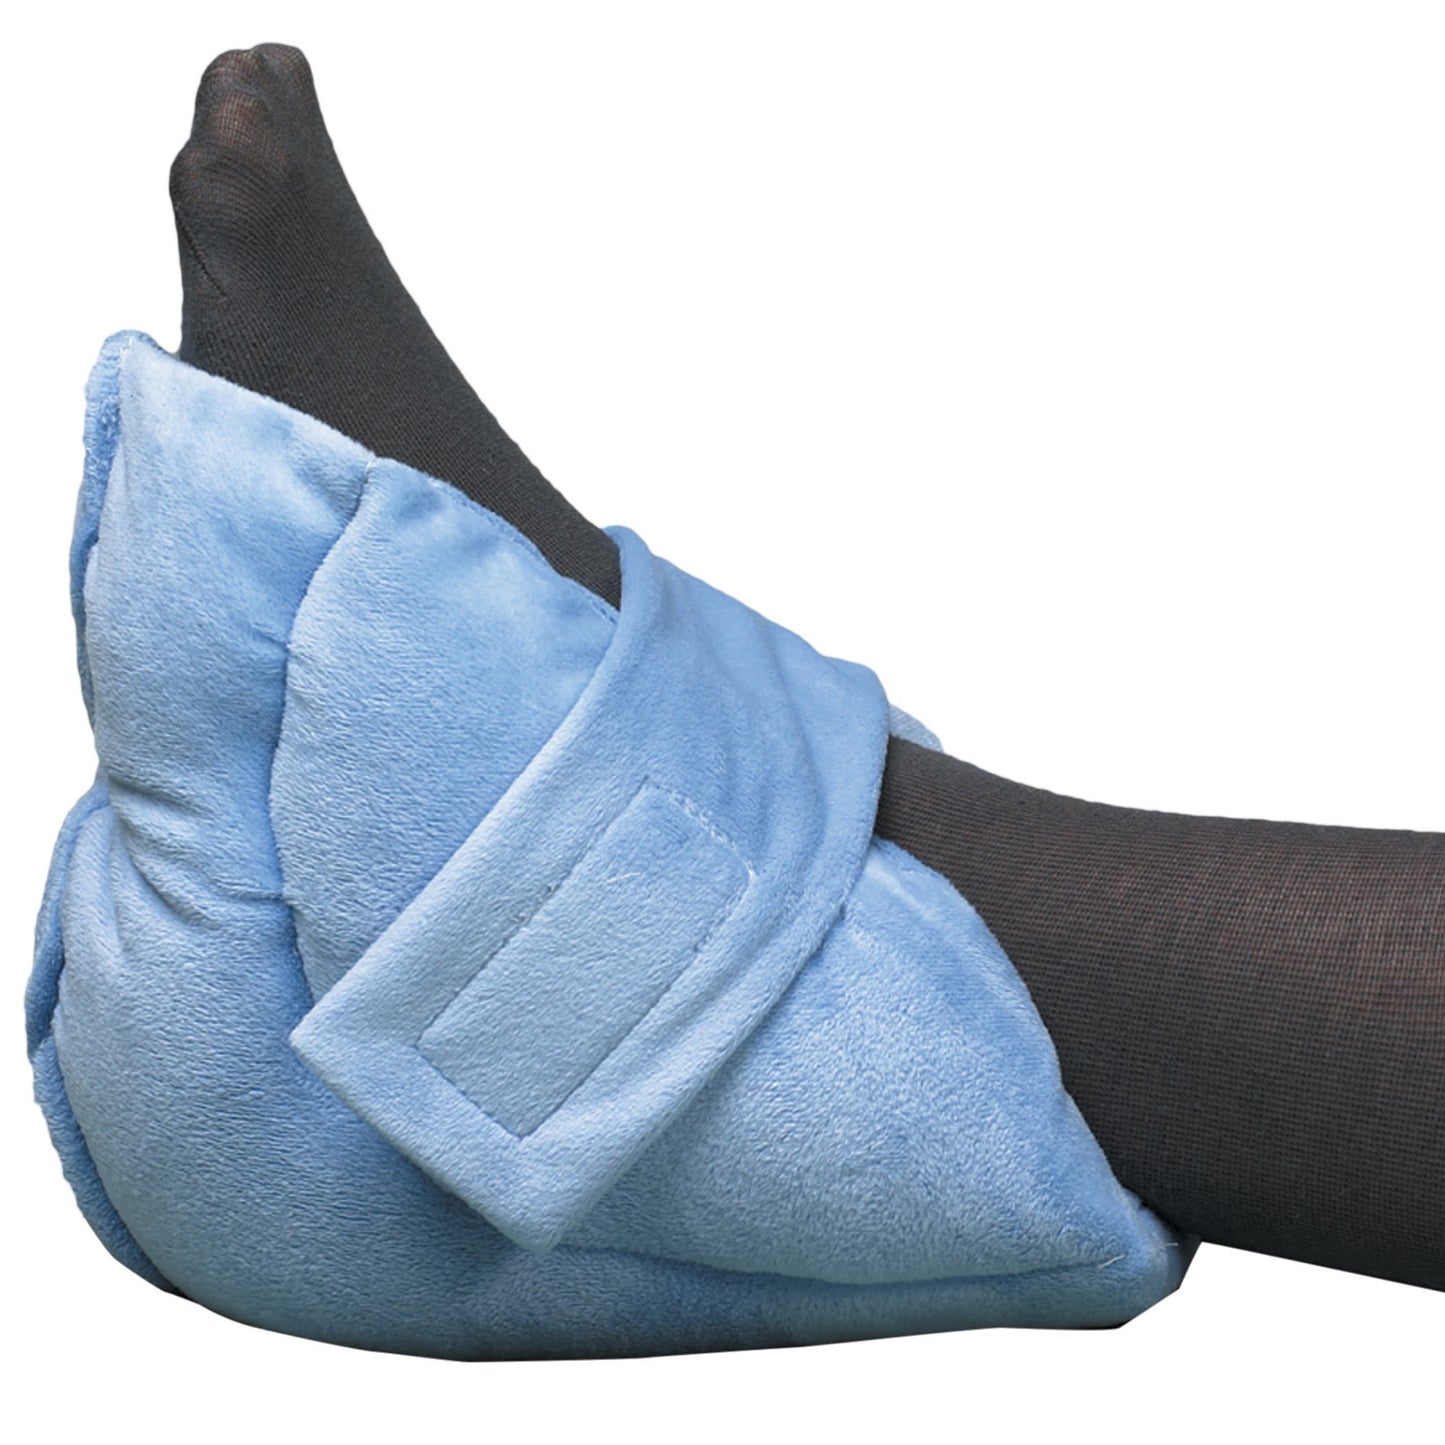 SkiL-Care™ Ultra-Soft Heel Protector Pad